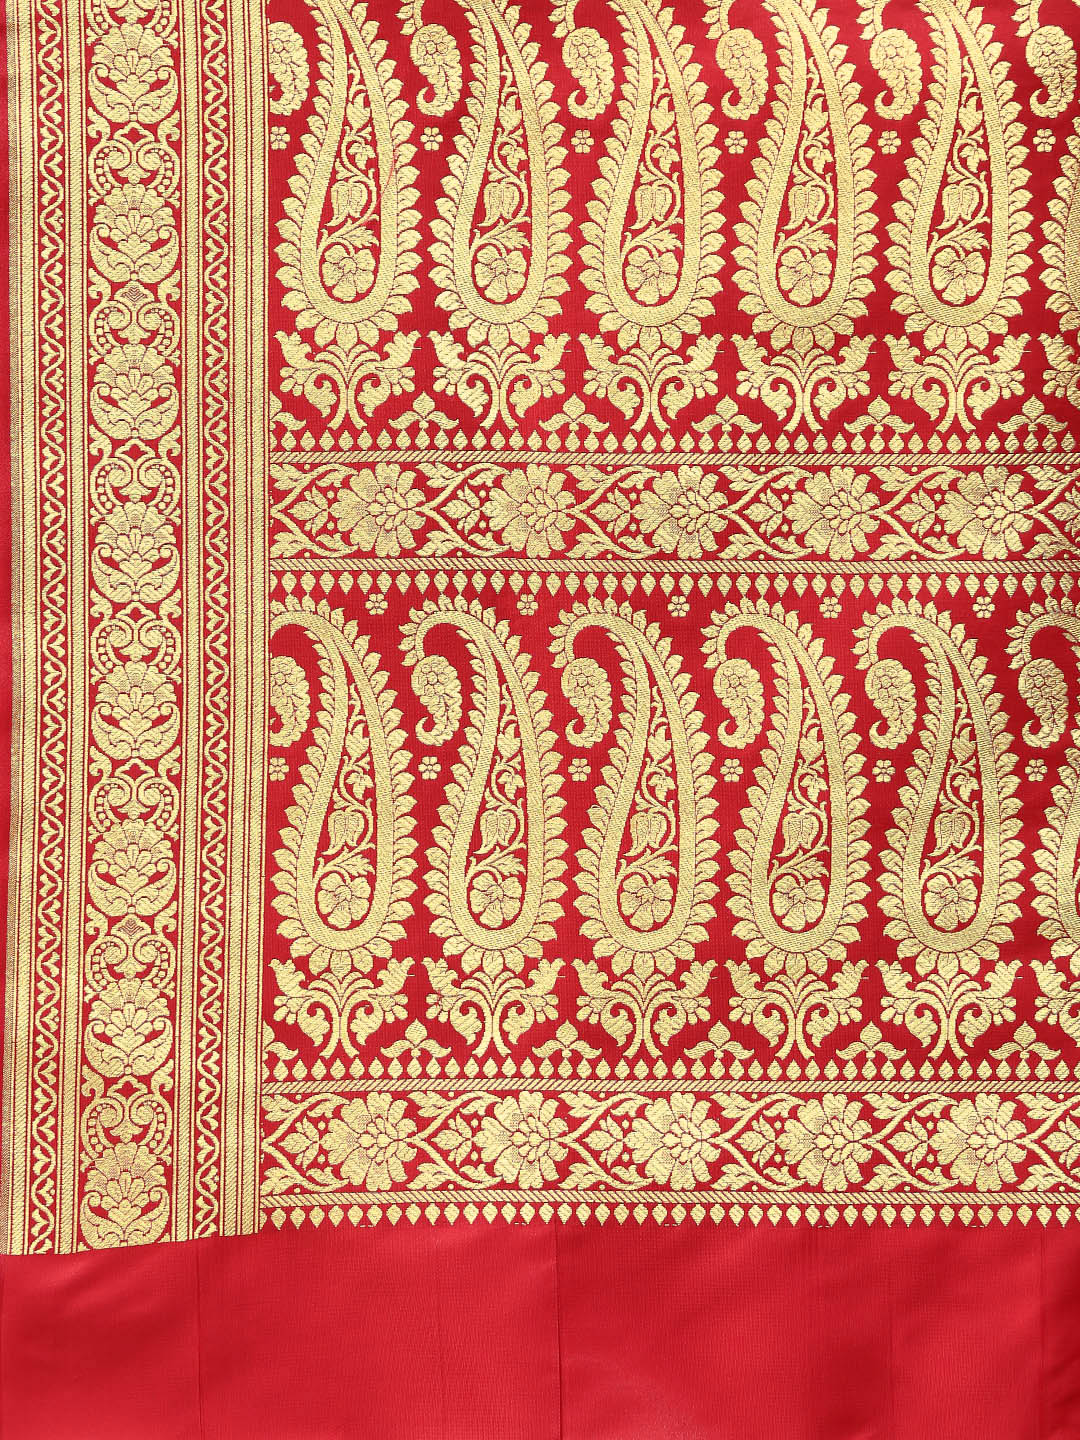 Kanjiwaram Handloom Silk Saree with Intricate Zari Motifs